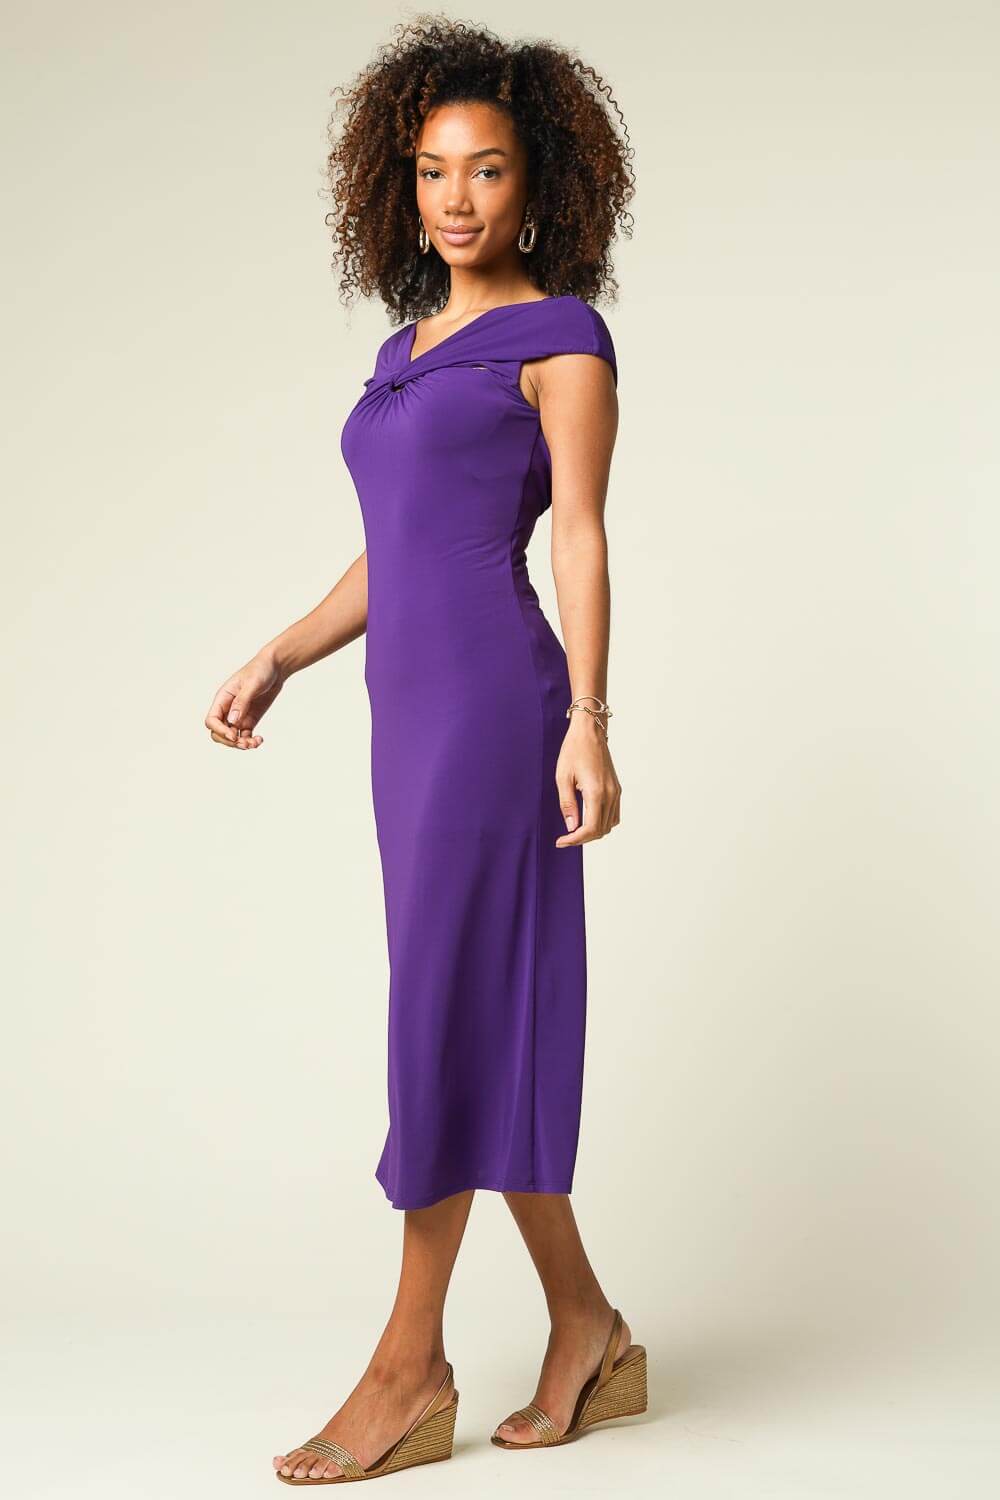 Sexy Violet Dress